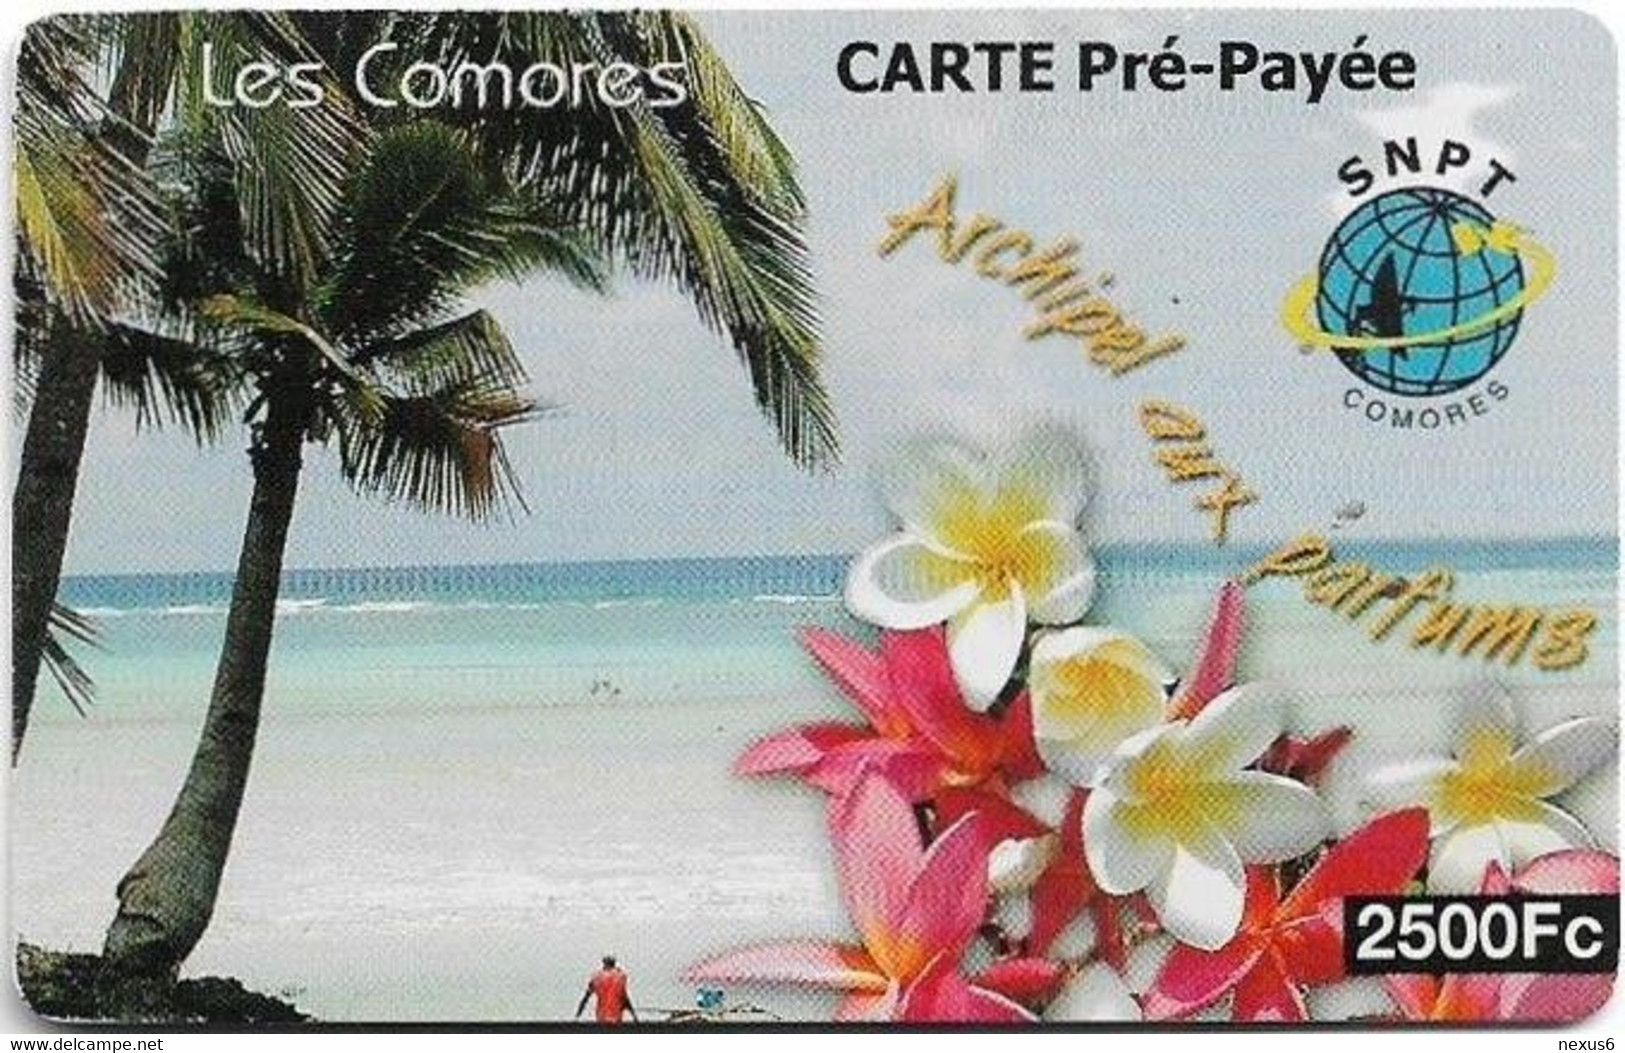 Comoros - S.N.P.T. - Archipel Aux Parfums, GSM Refill 2.500CF, Used - Comoros